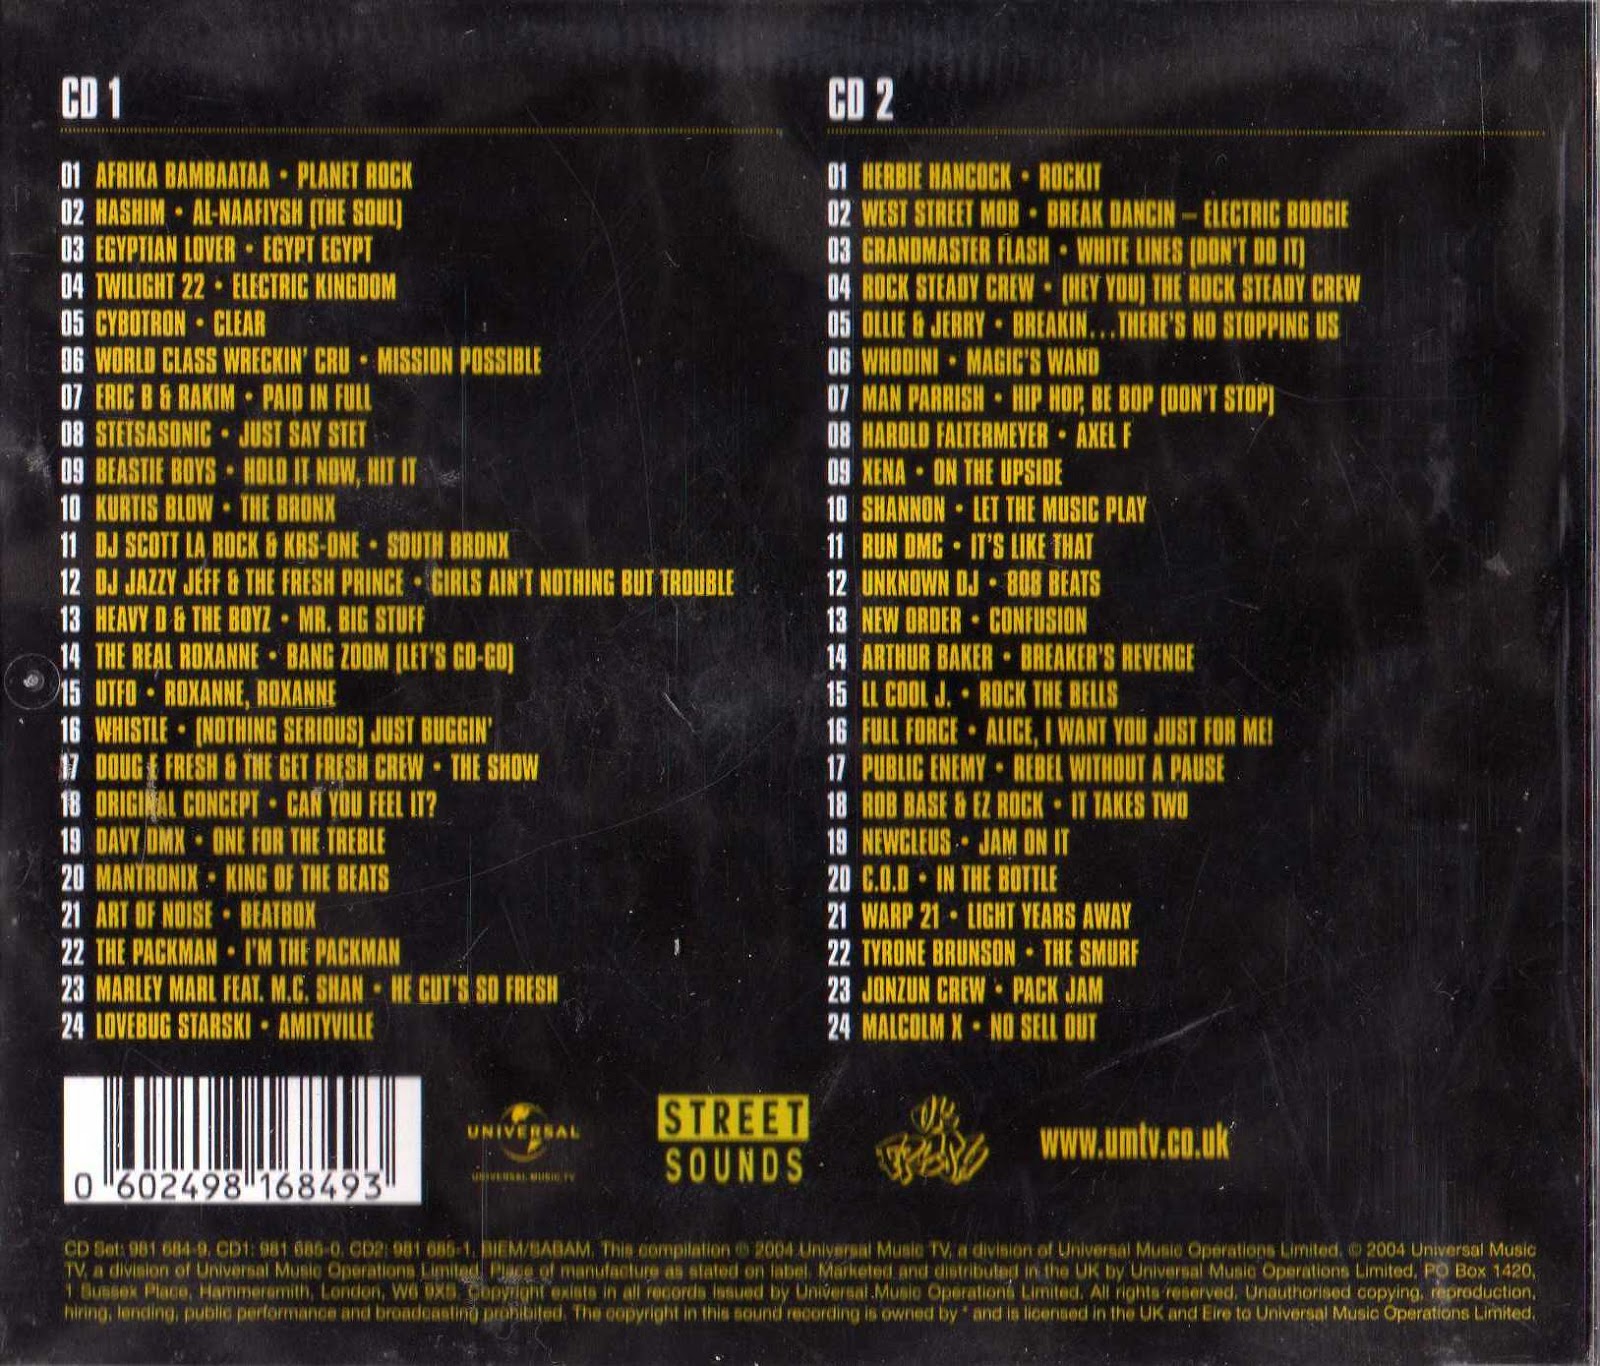 VA - The Definitive Electro & Hip Hop Collection (2004) (2CD) 320kbps Img405